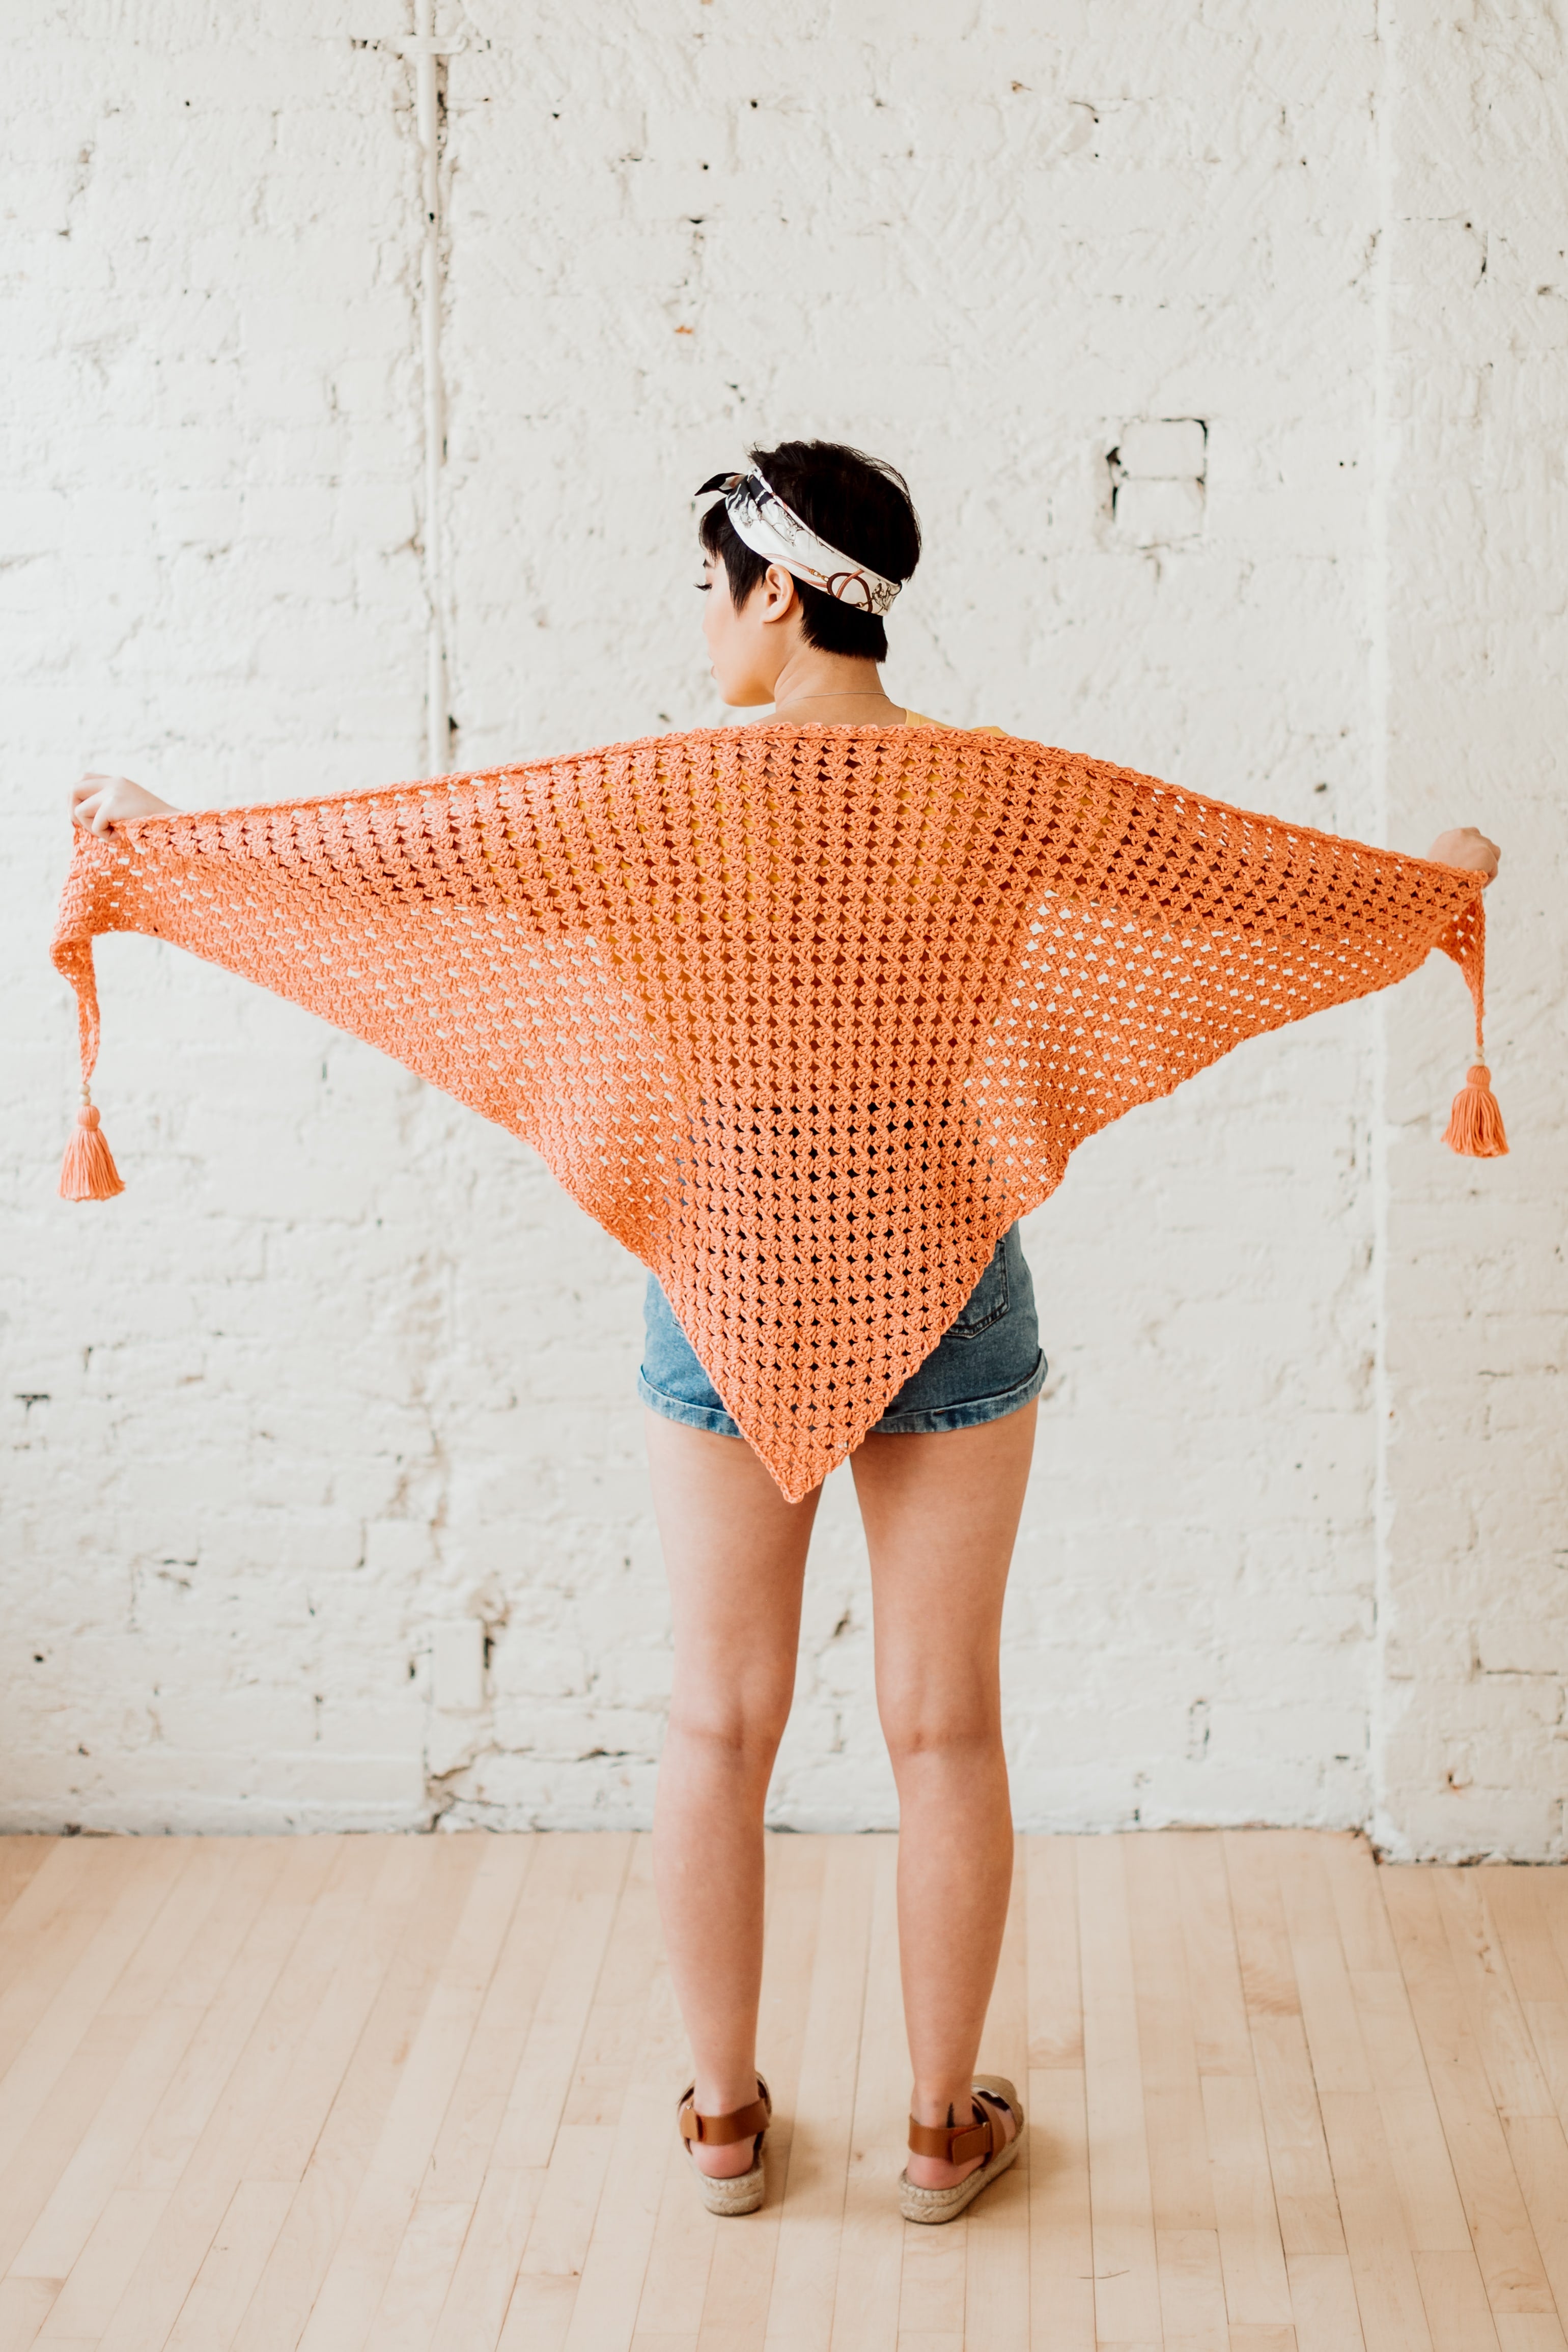 Josie Shawl // Crochet PDF Pattern